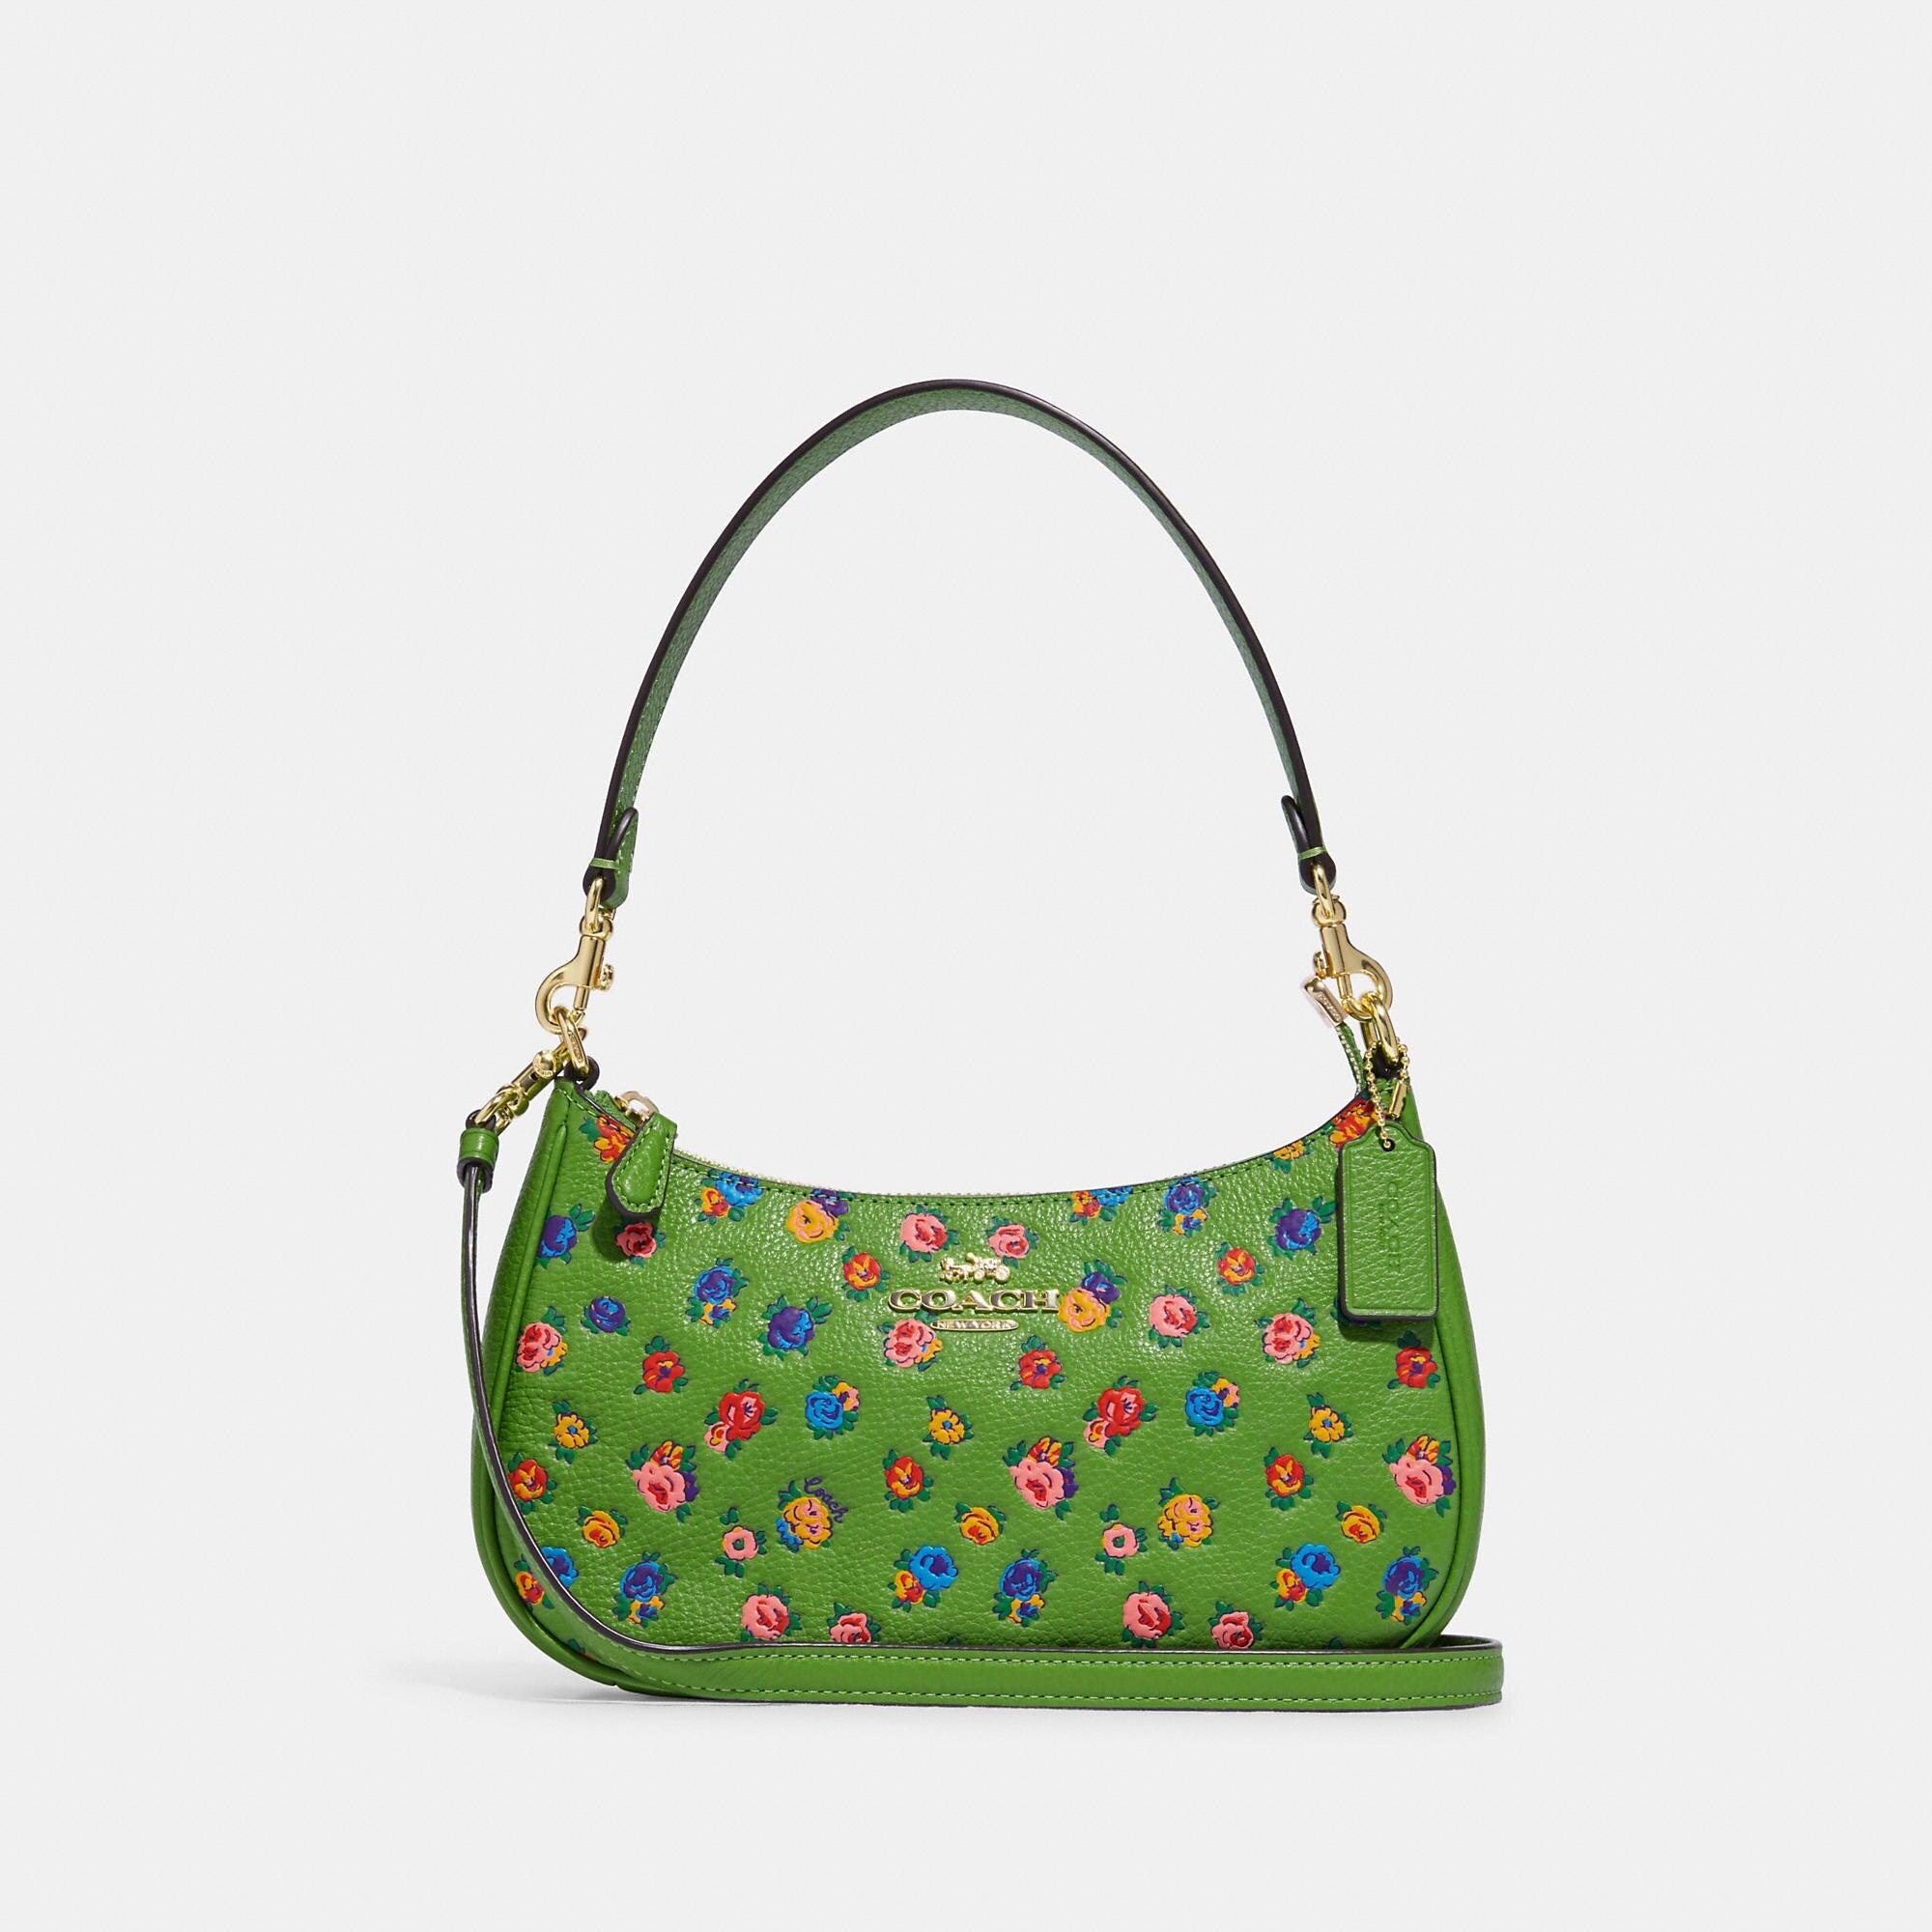 Handbags / Purses from Coach for Women in Green